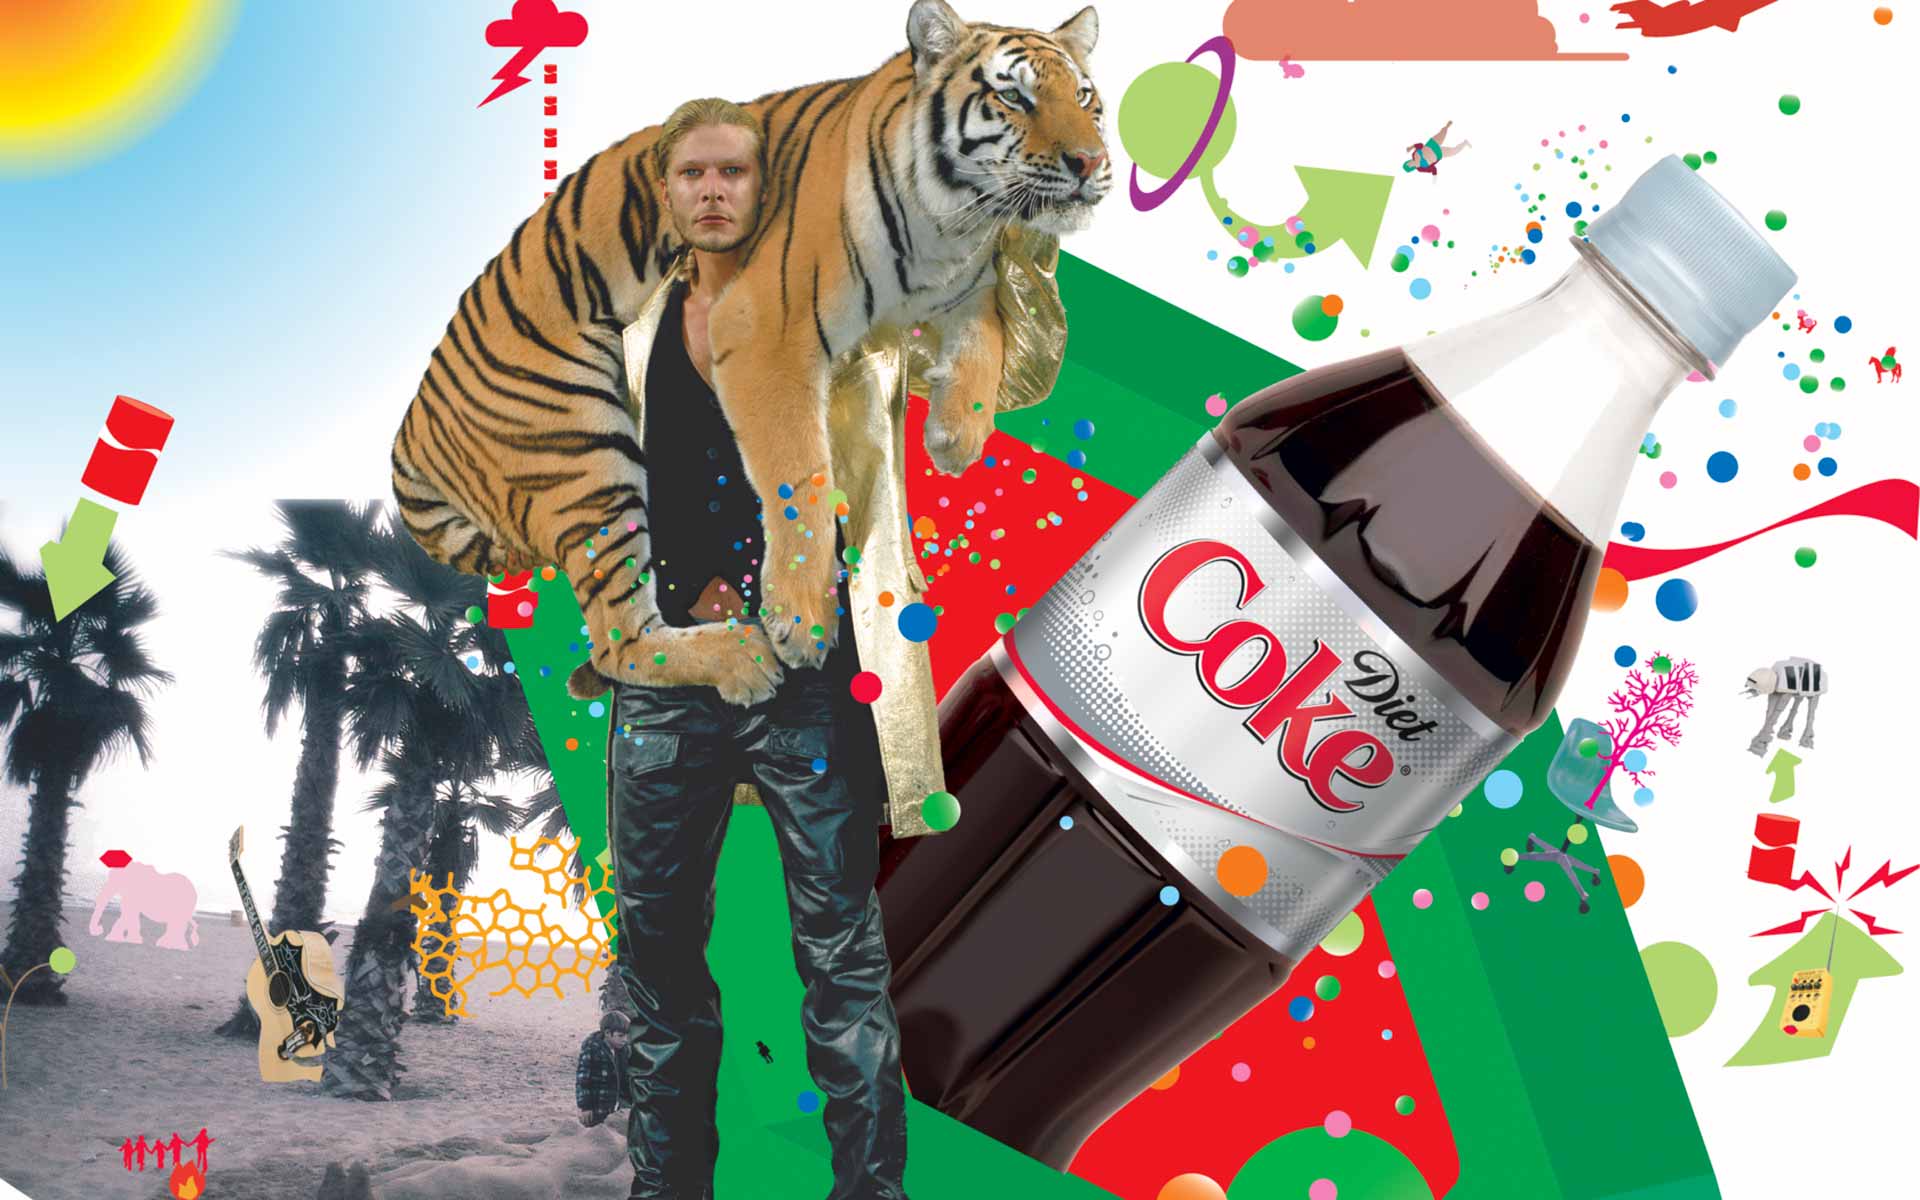 Diet Coke Fantasy by Ali Madad at Ogilvy's Brand Integration Group